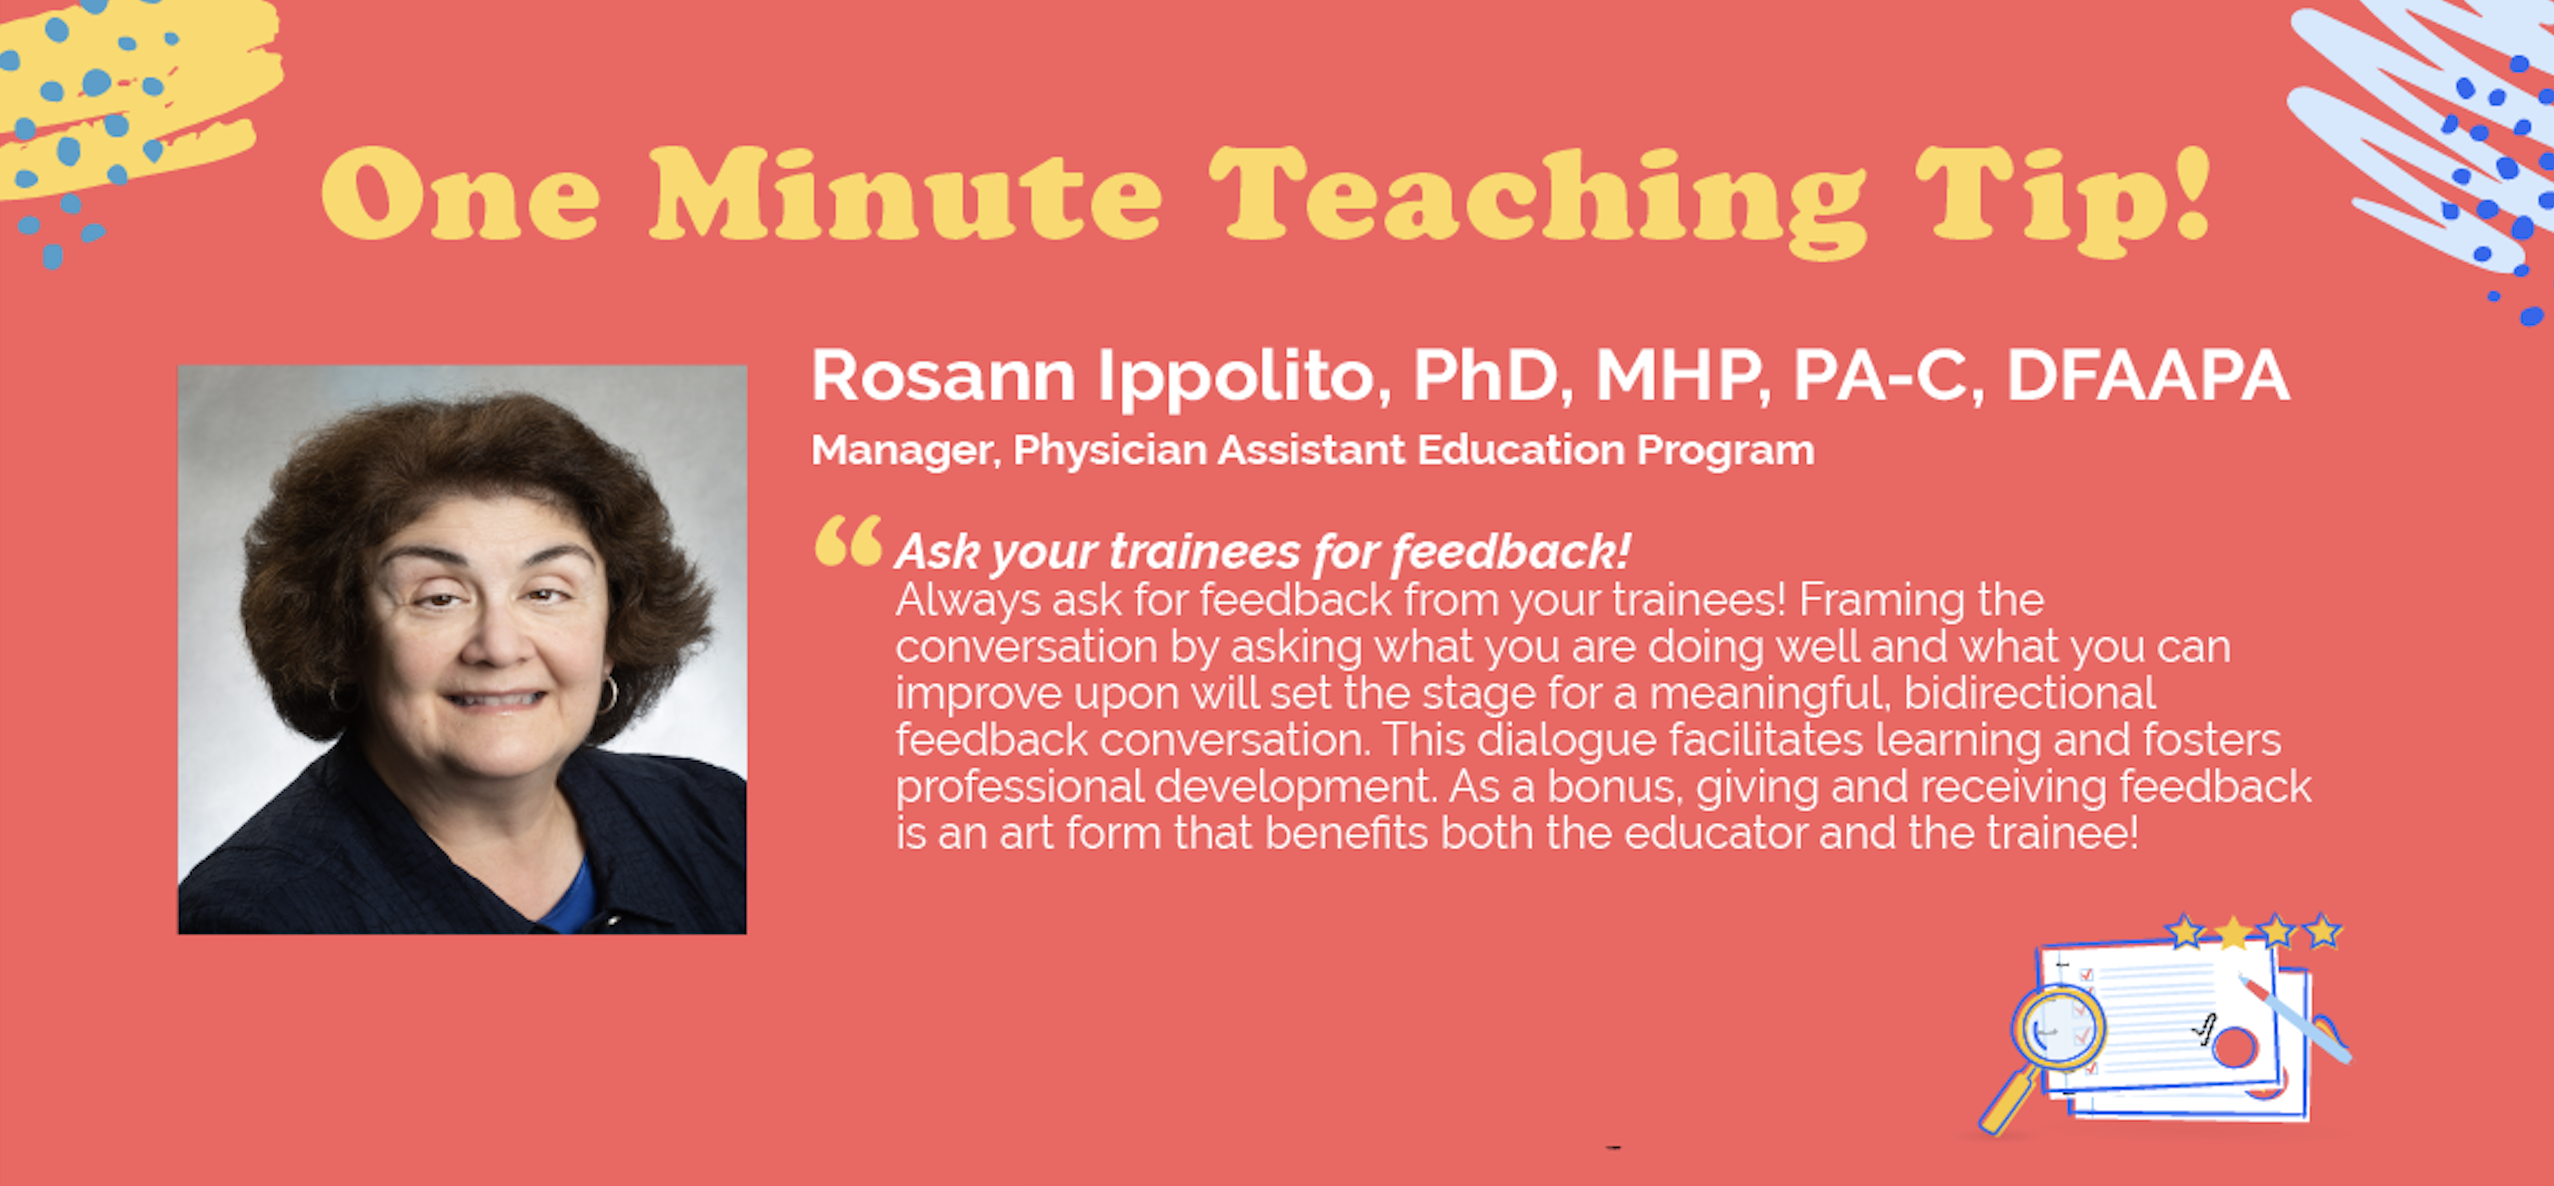 Rosann ippolito teach tip image